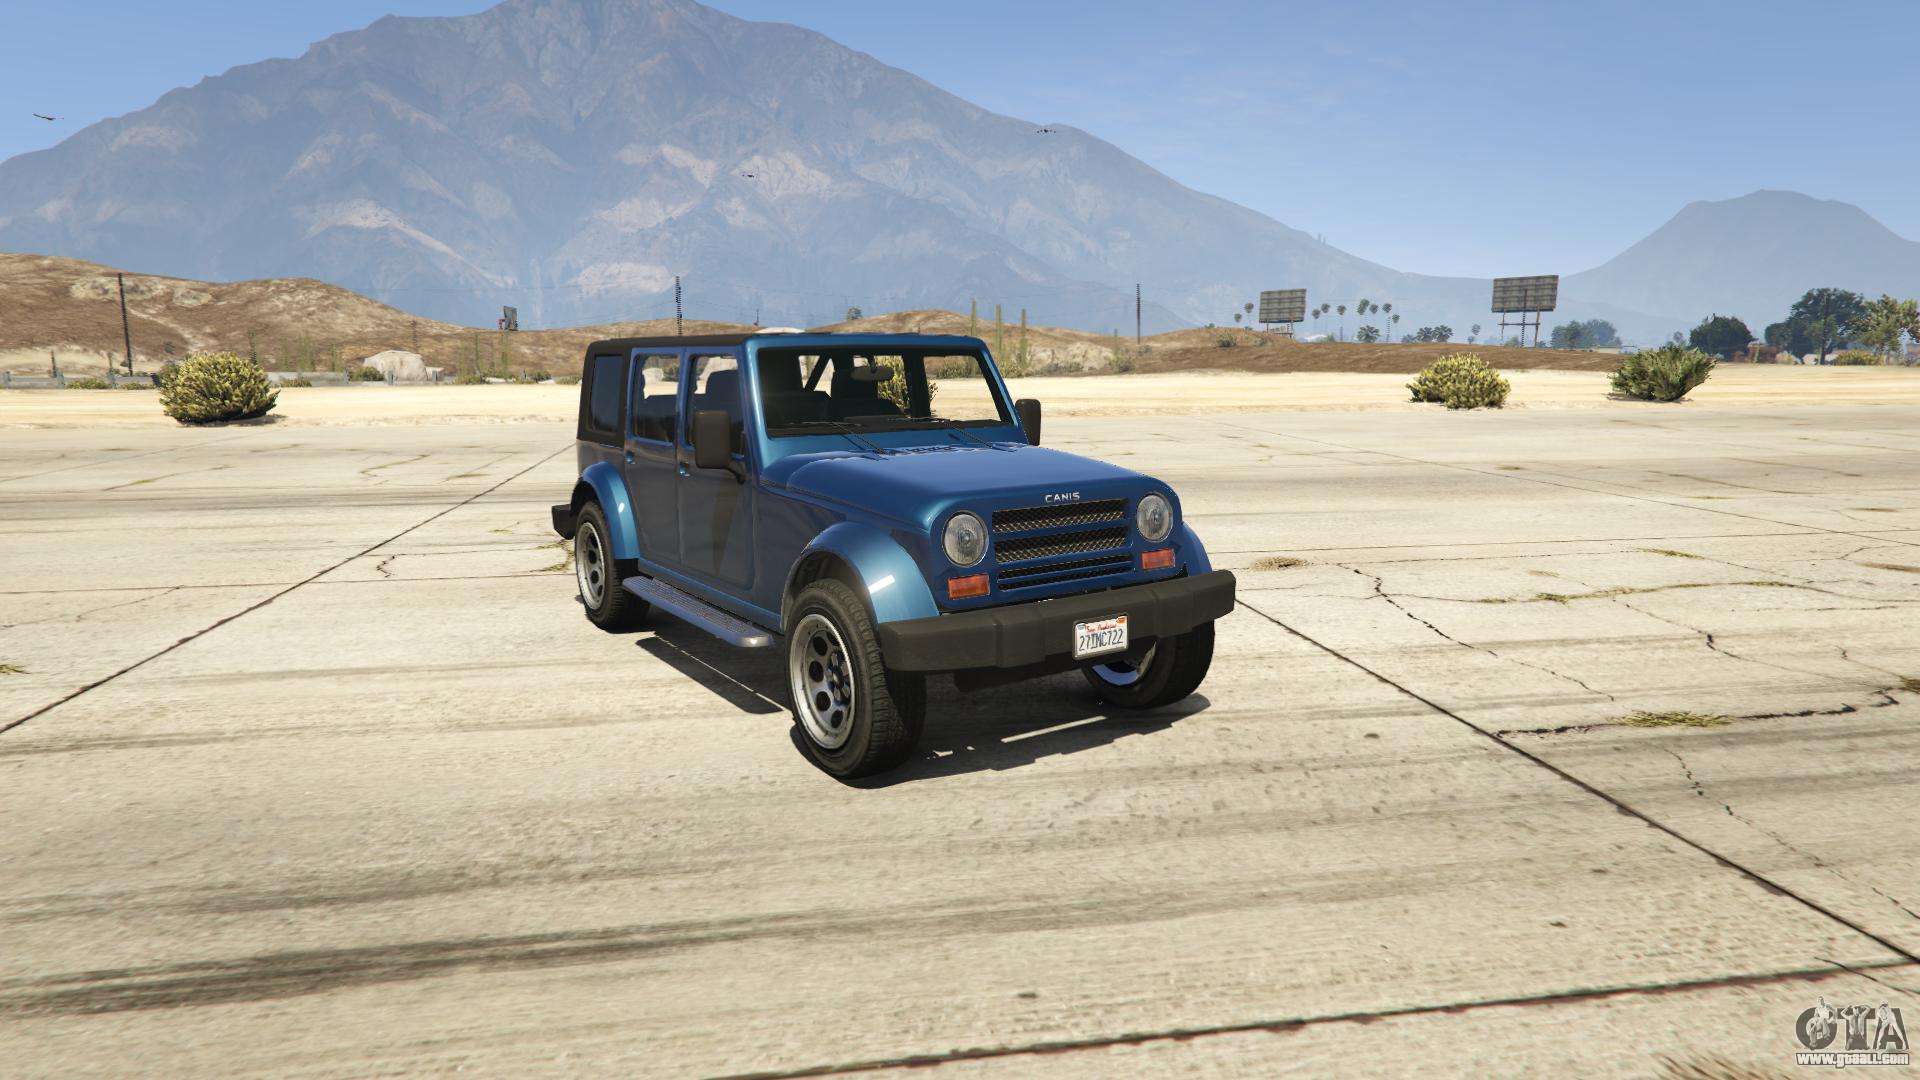 GTA 5 Canis Mesa Screenshots Features And Description City Jeep